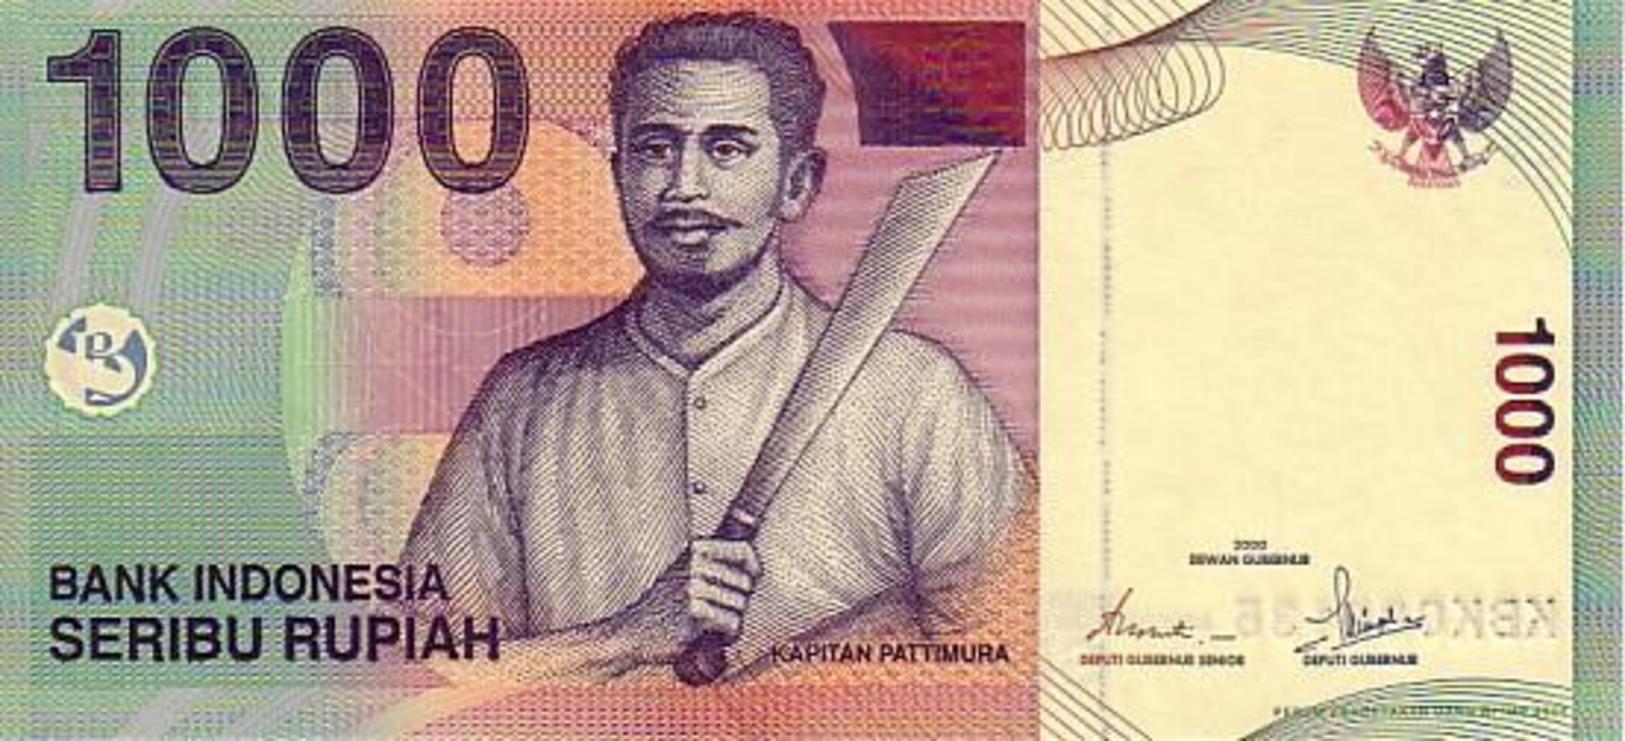 INDONESIE    1 000 Rupiah  Daté De 2000/2002    Pick 141c     *****BILLET  NEUF***** - Indonesia